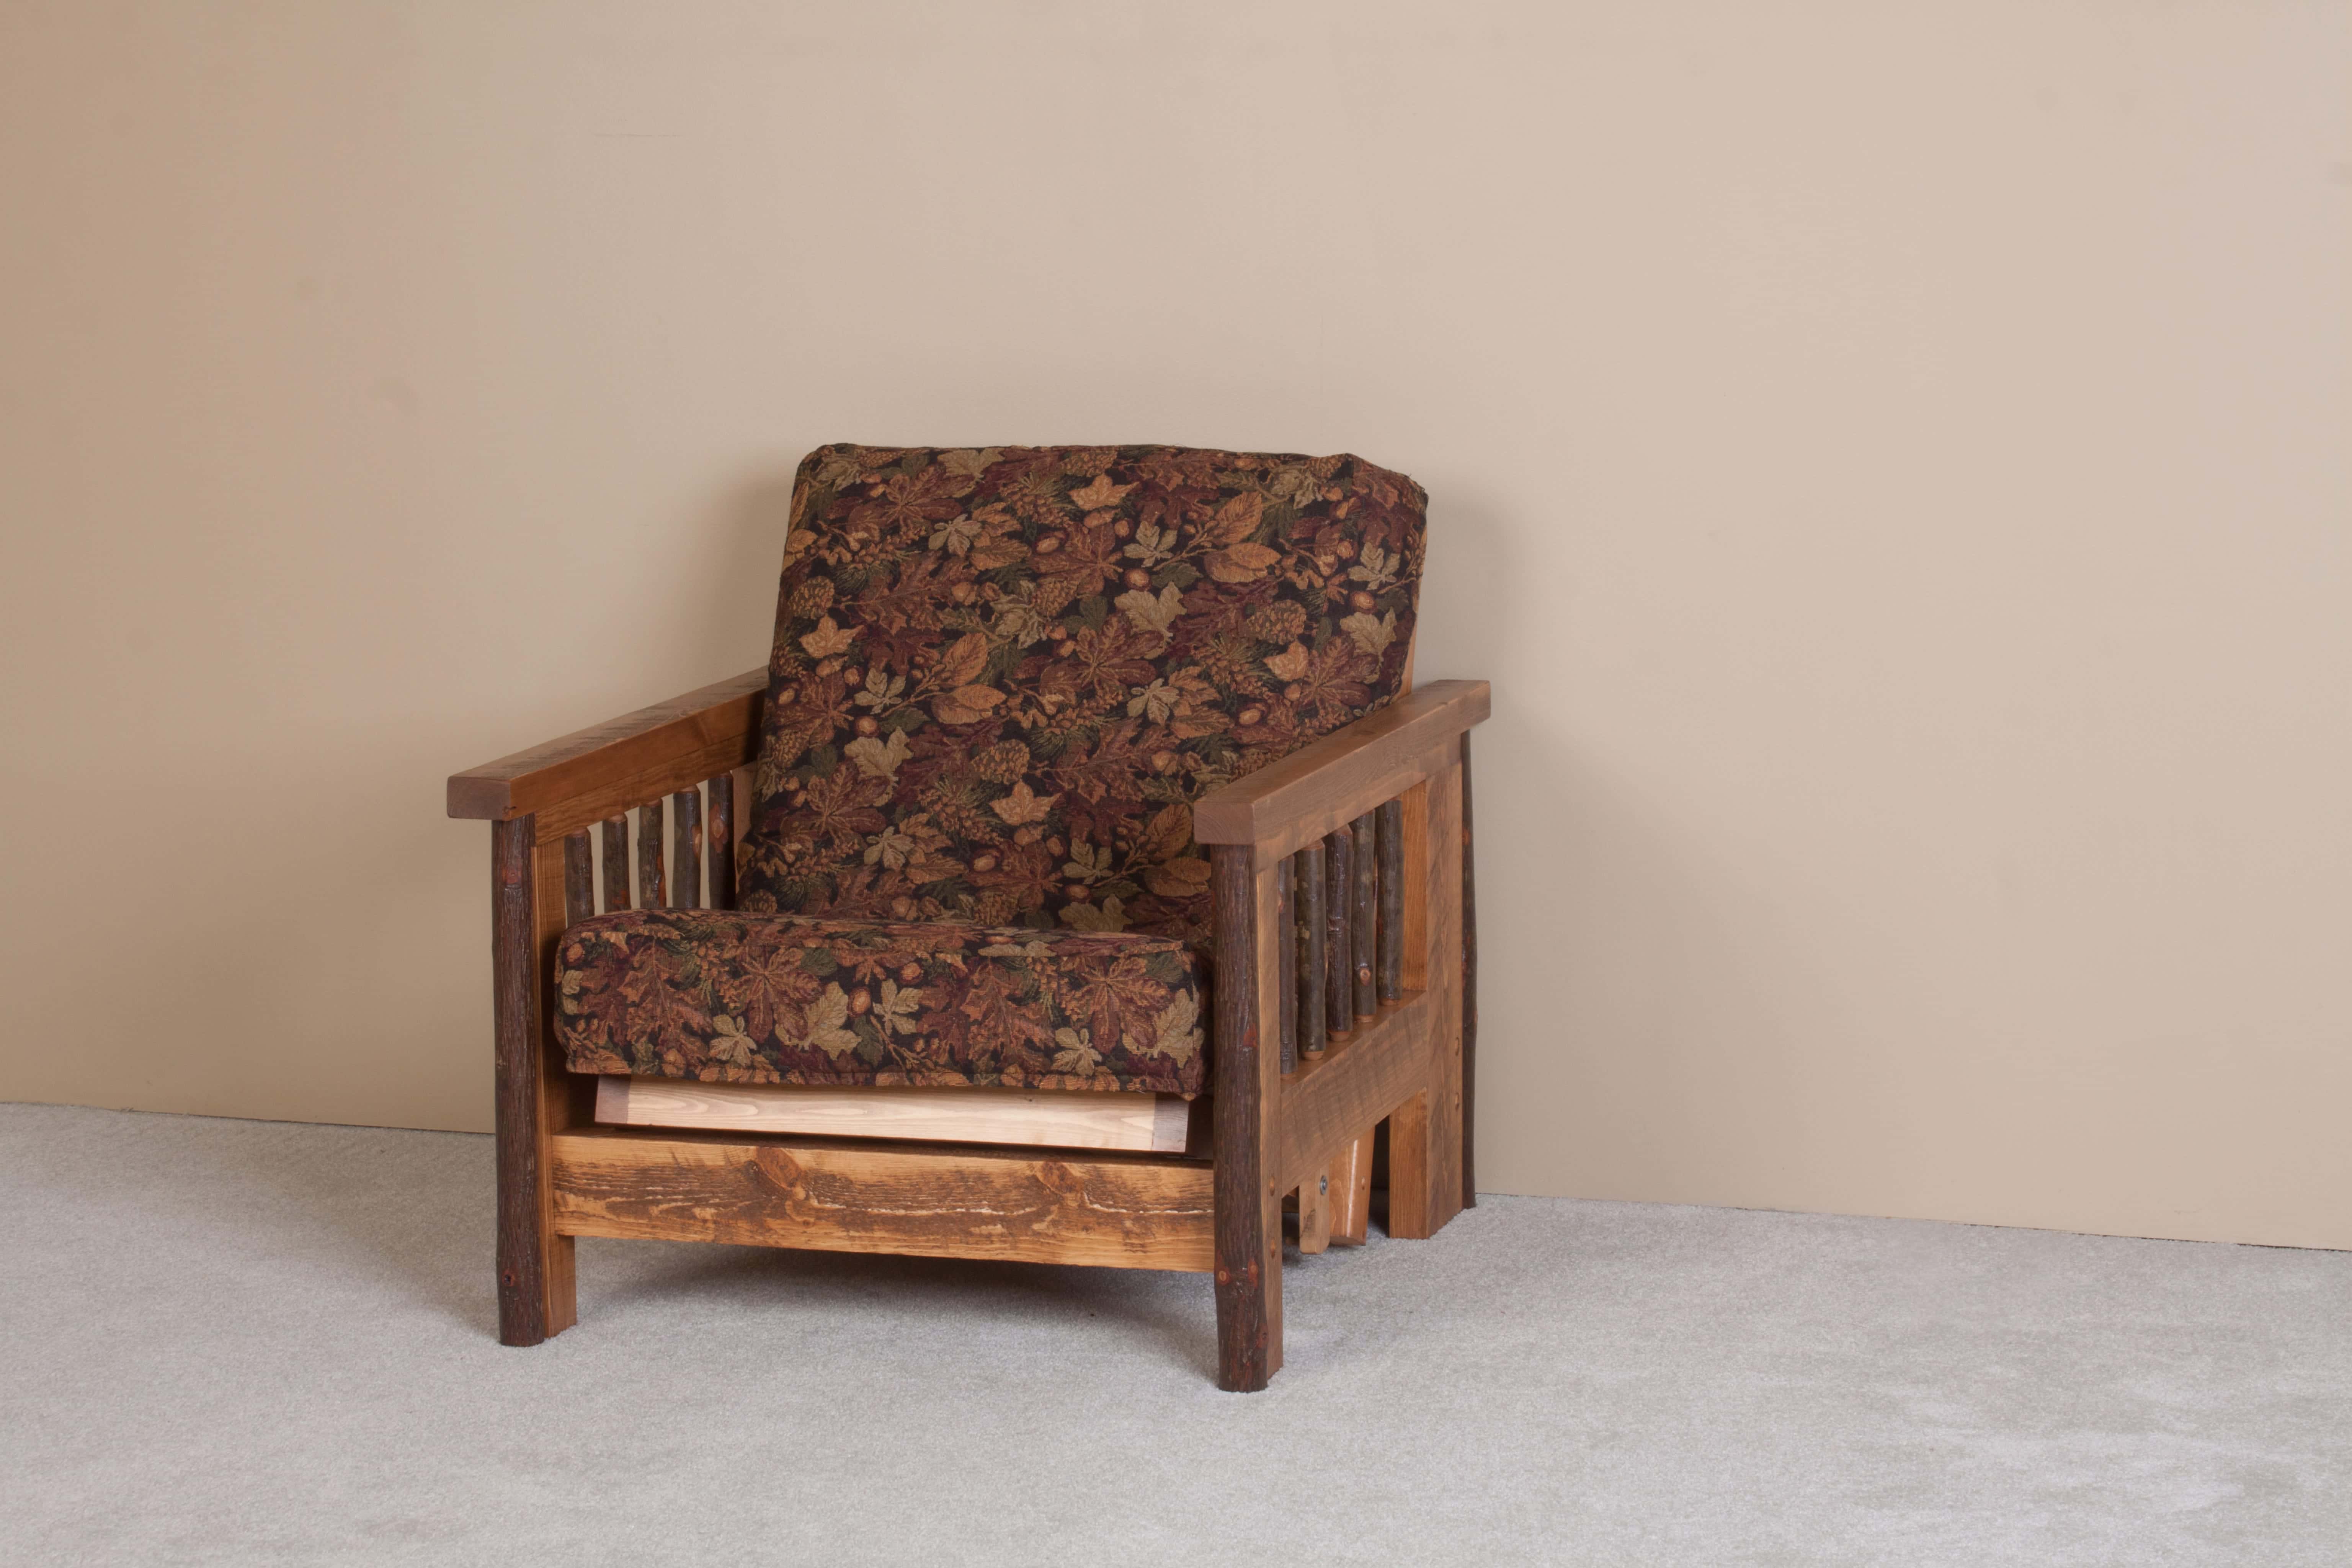 Sawtooth Hickory Futon Frame Chair by Viking Log Furniture